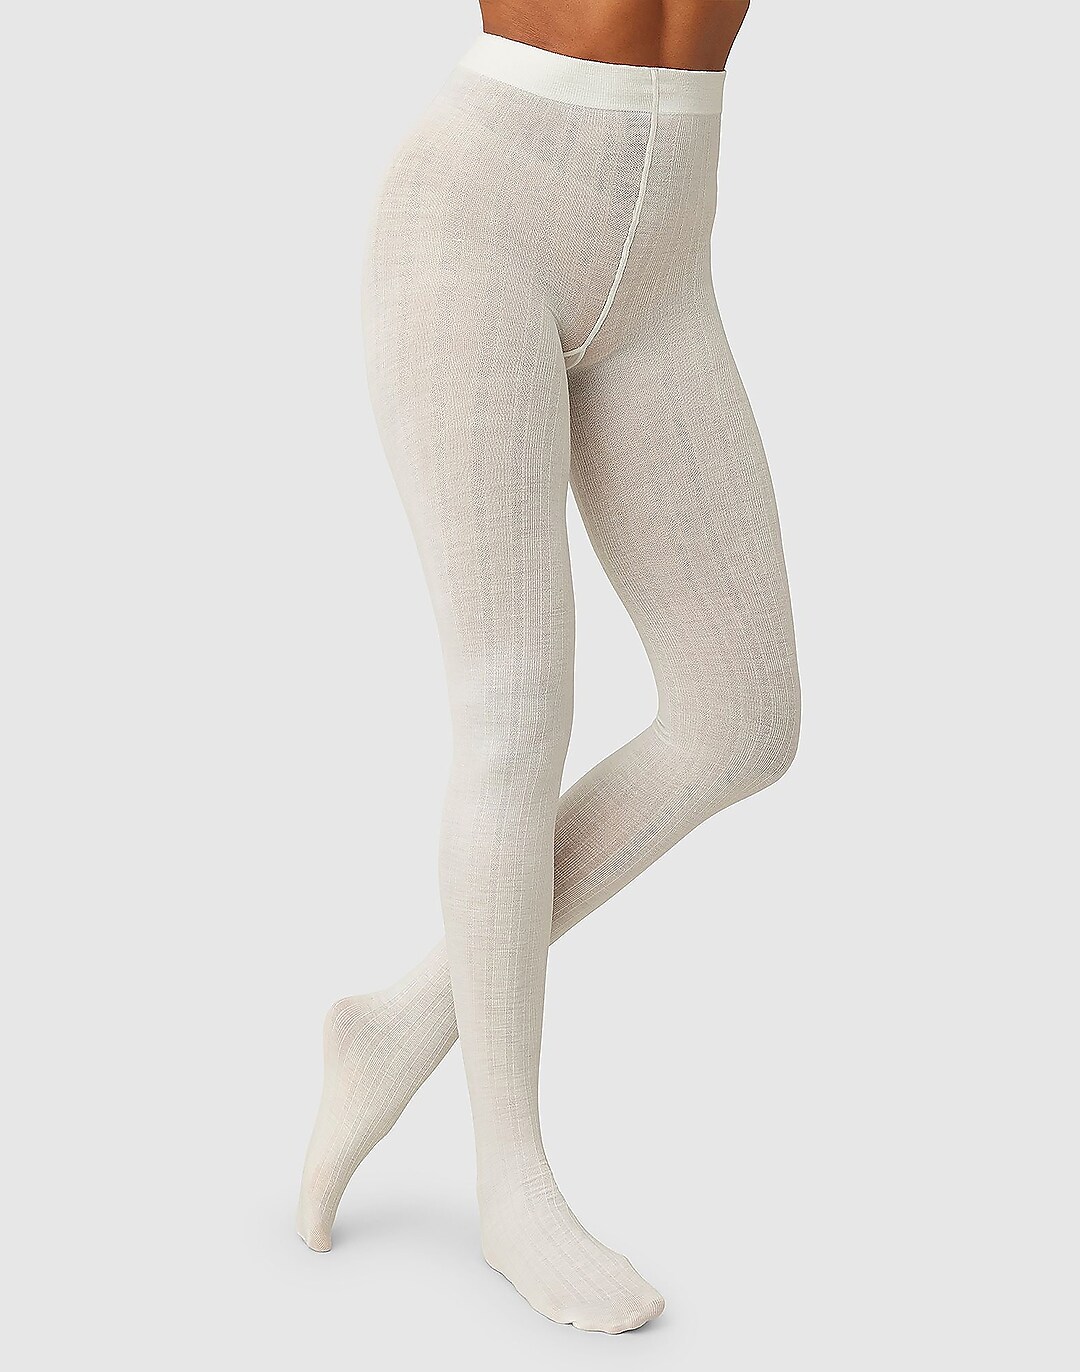 Stockings Tights Wool Freja Organic Swedish